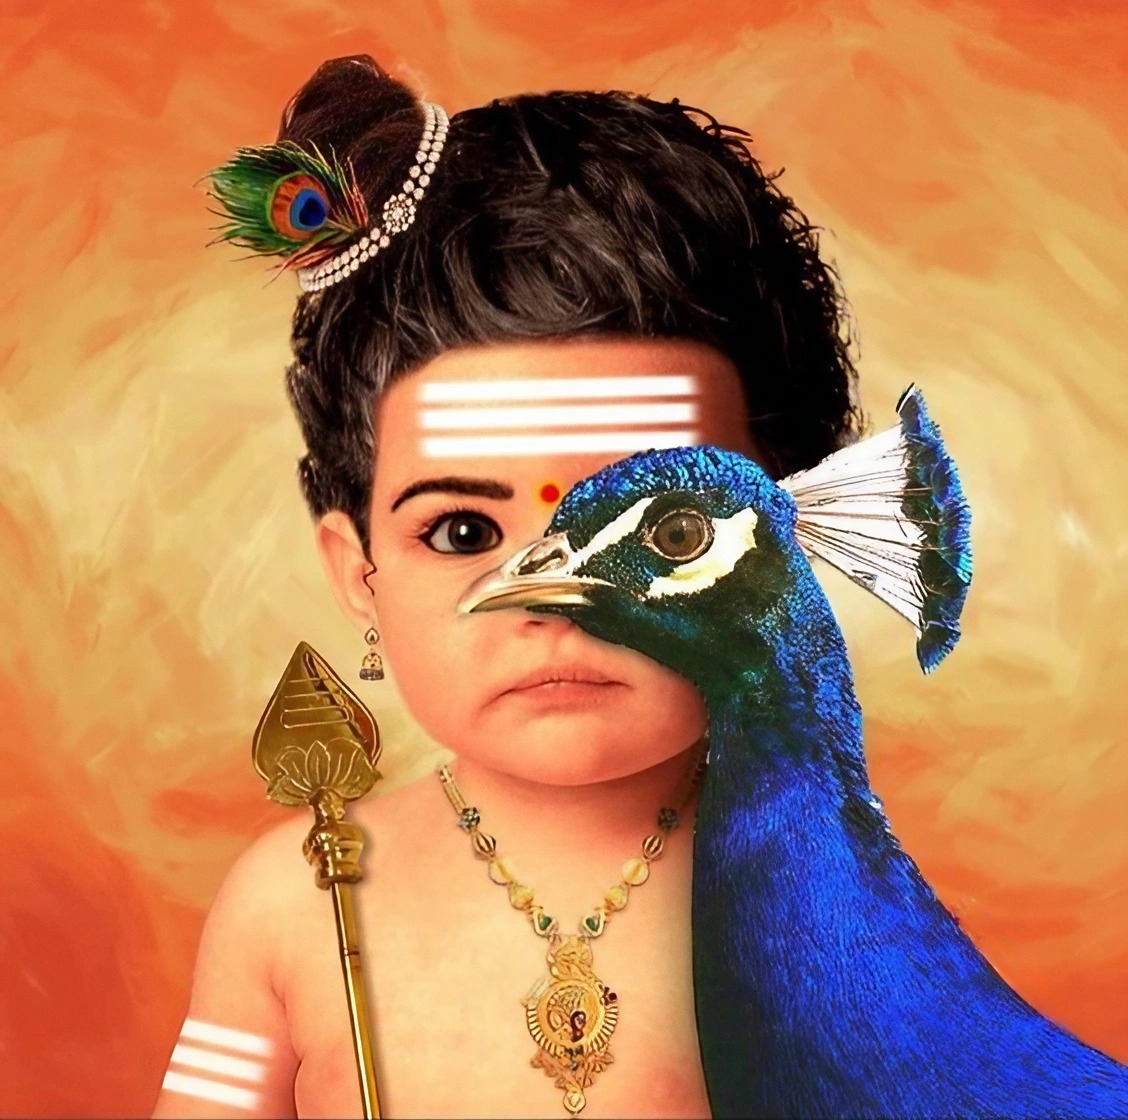 Lord Murugan Photos - Baby Lord Murugan And Peacock